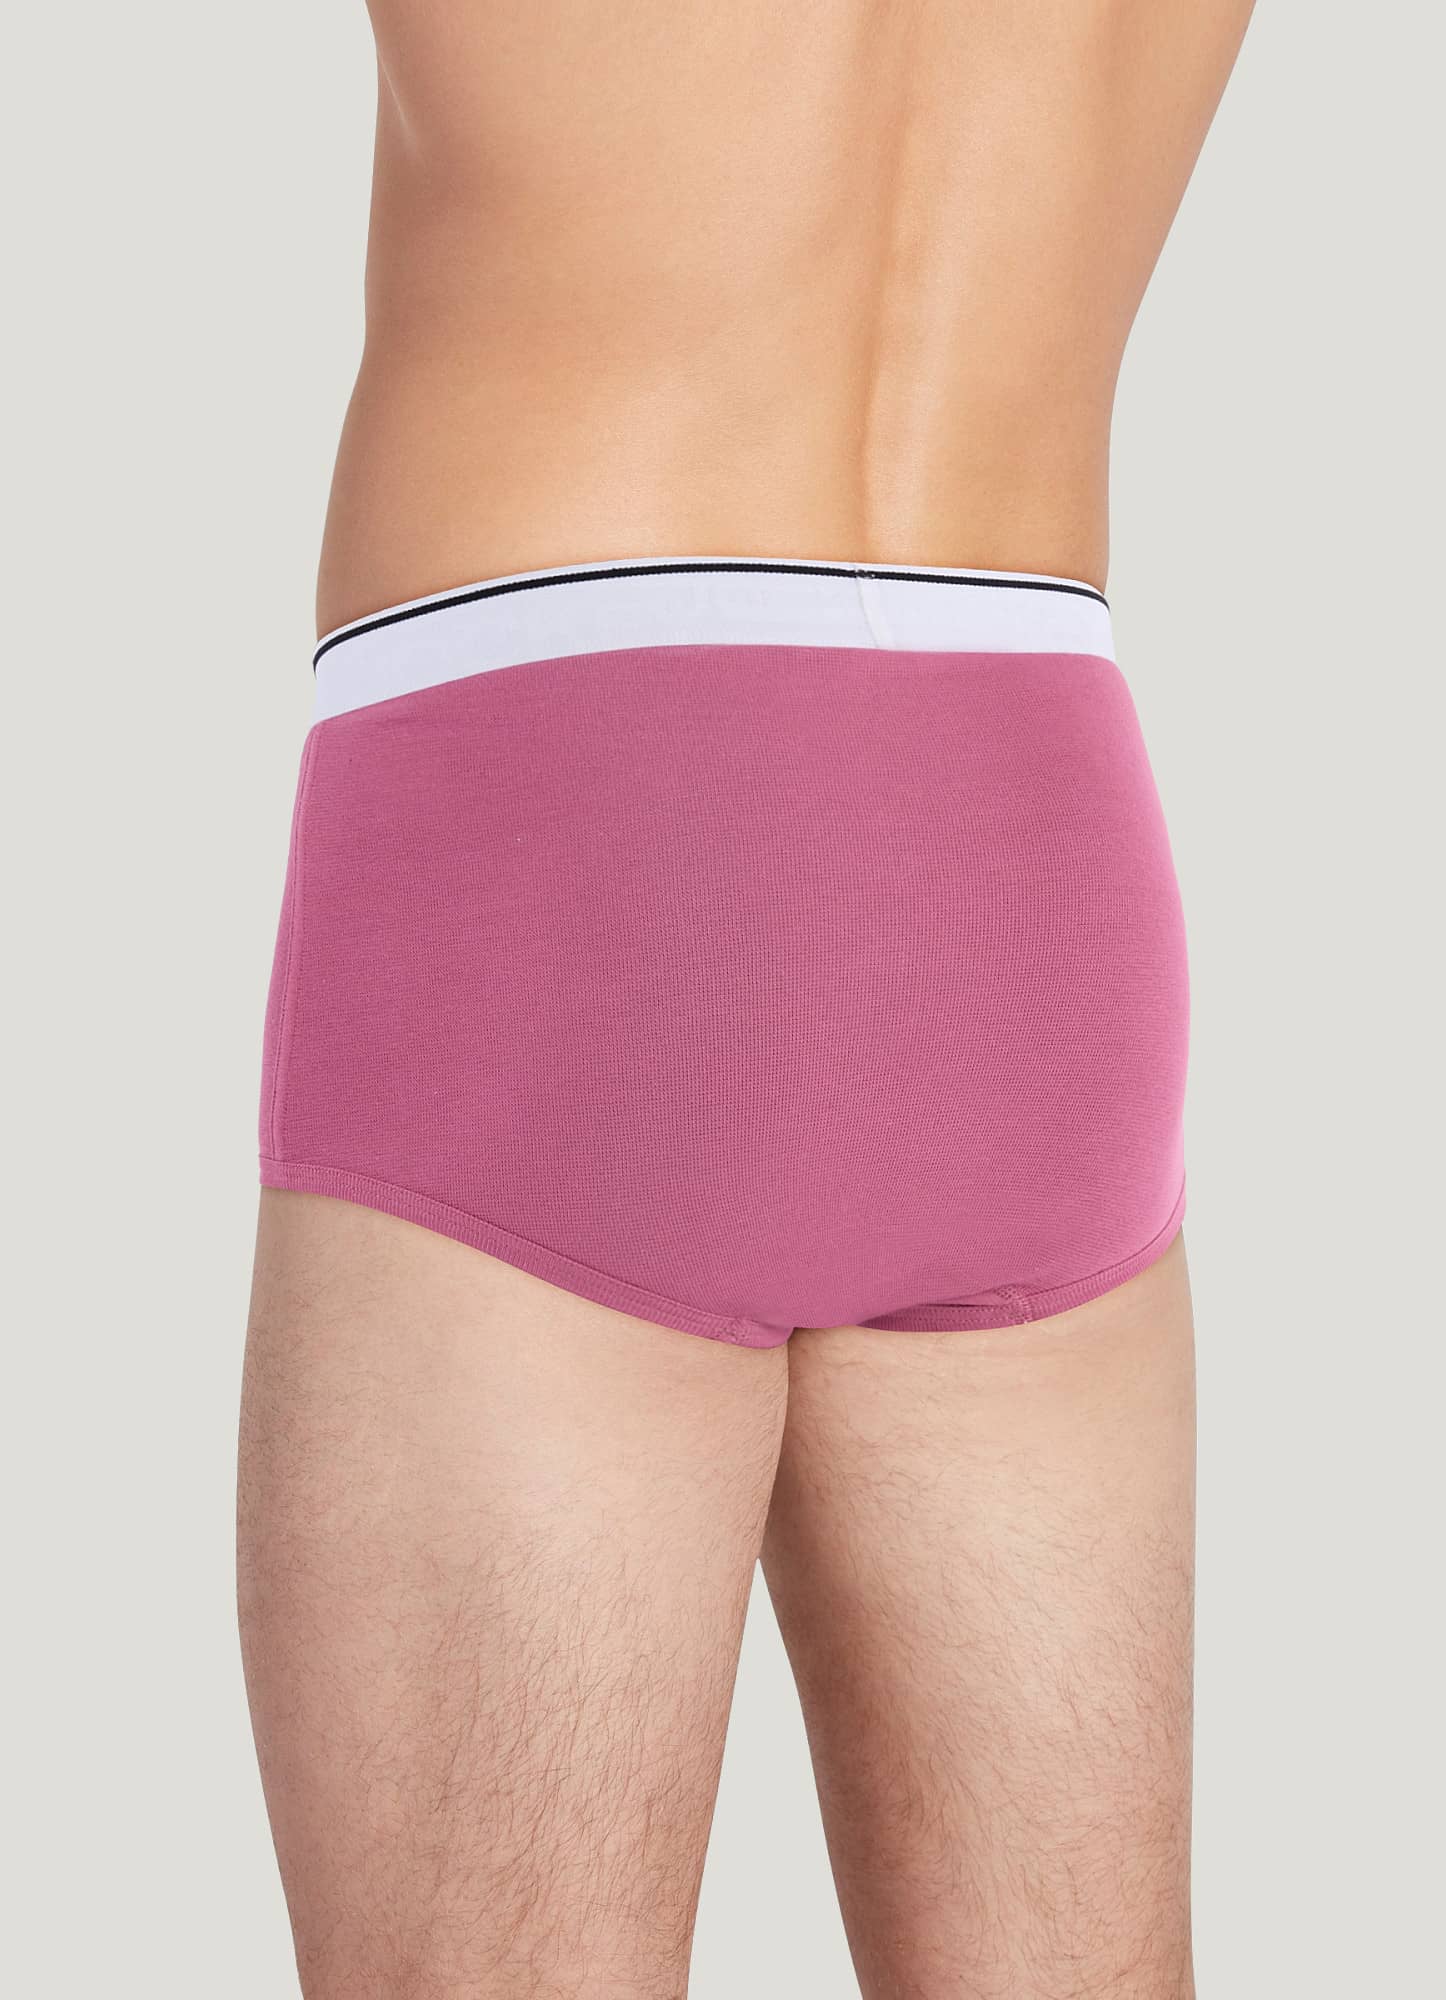 Men's Jockey Underwear 3-pack WHITE Color Bikini Briefs 100